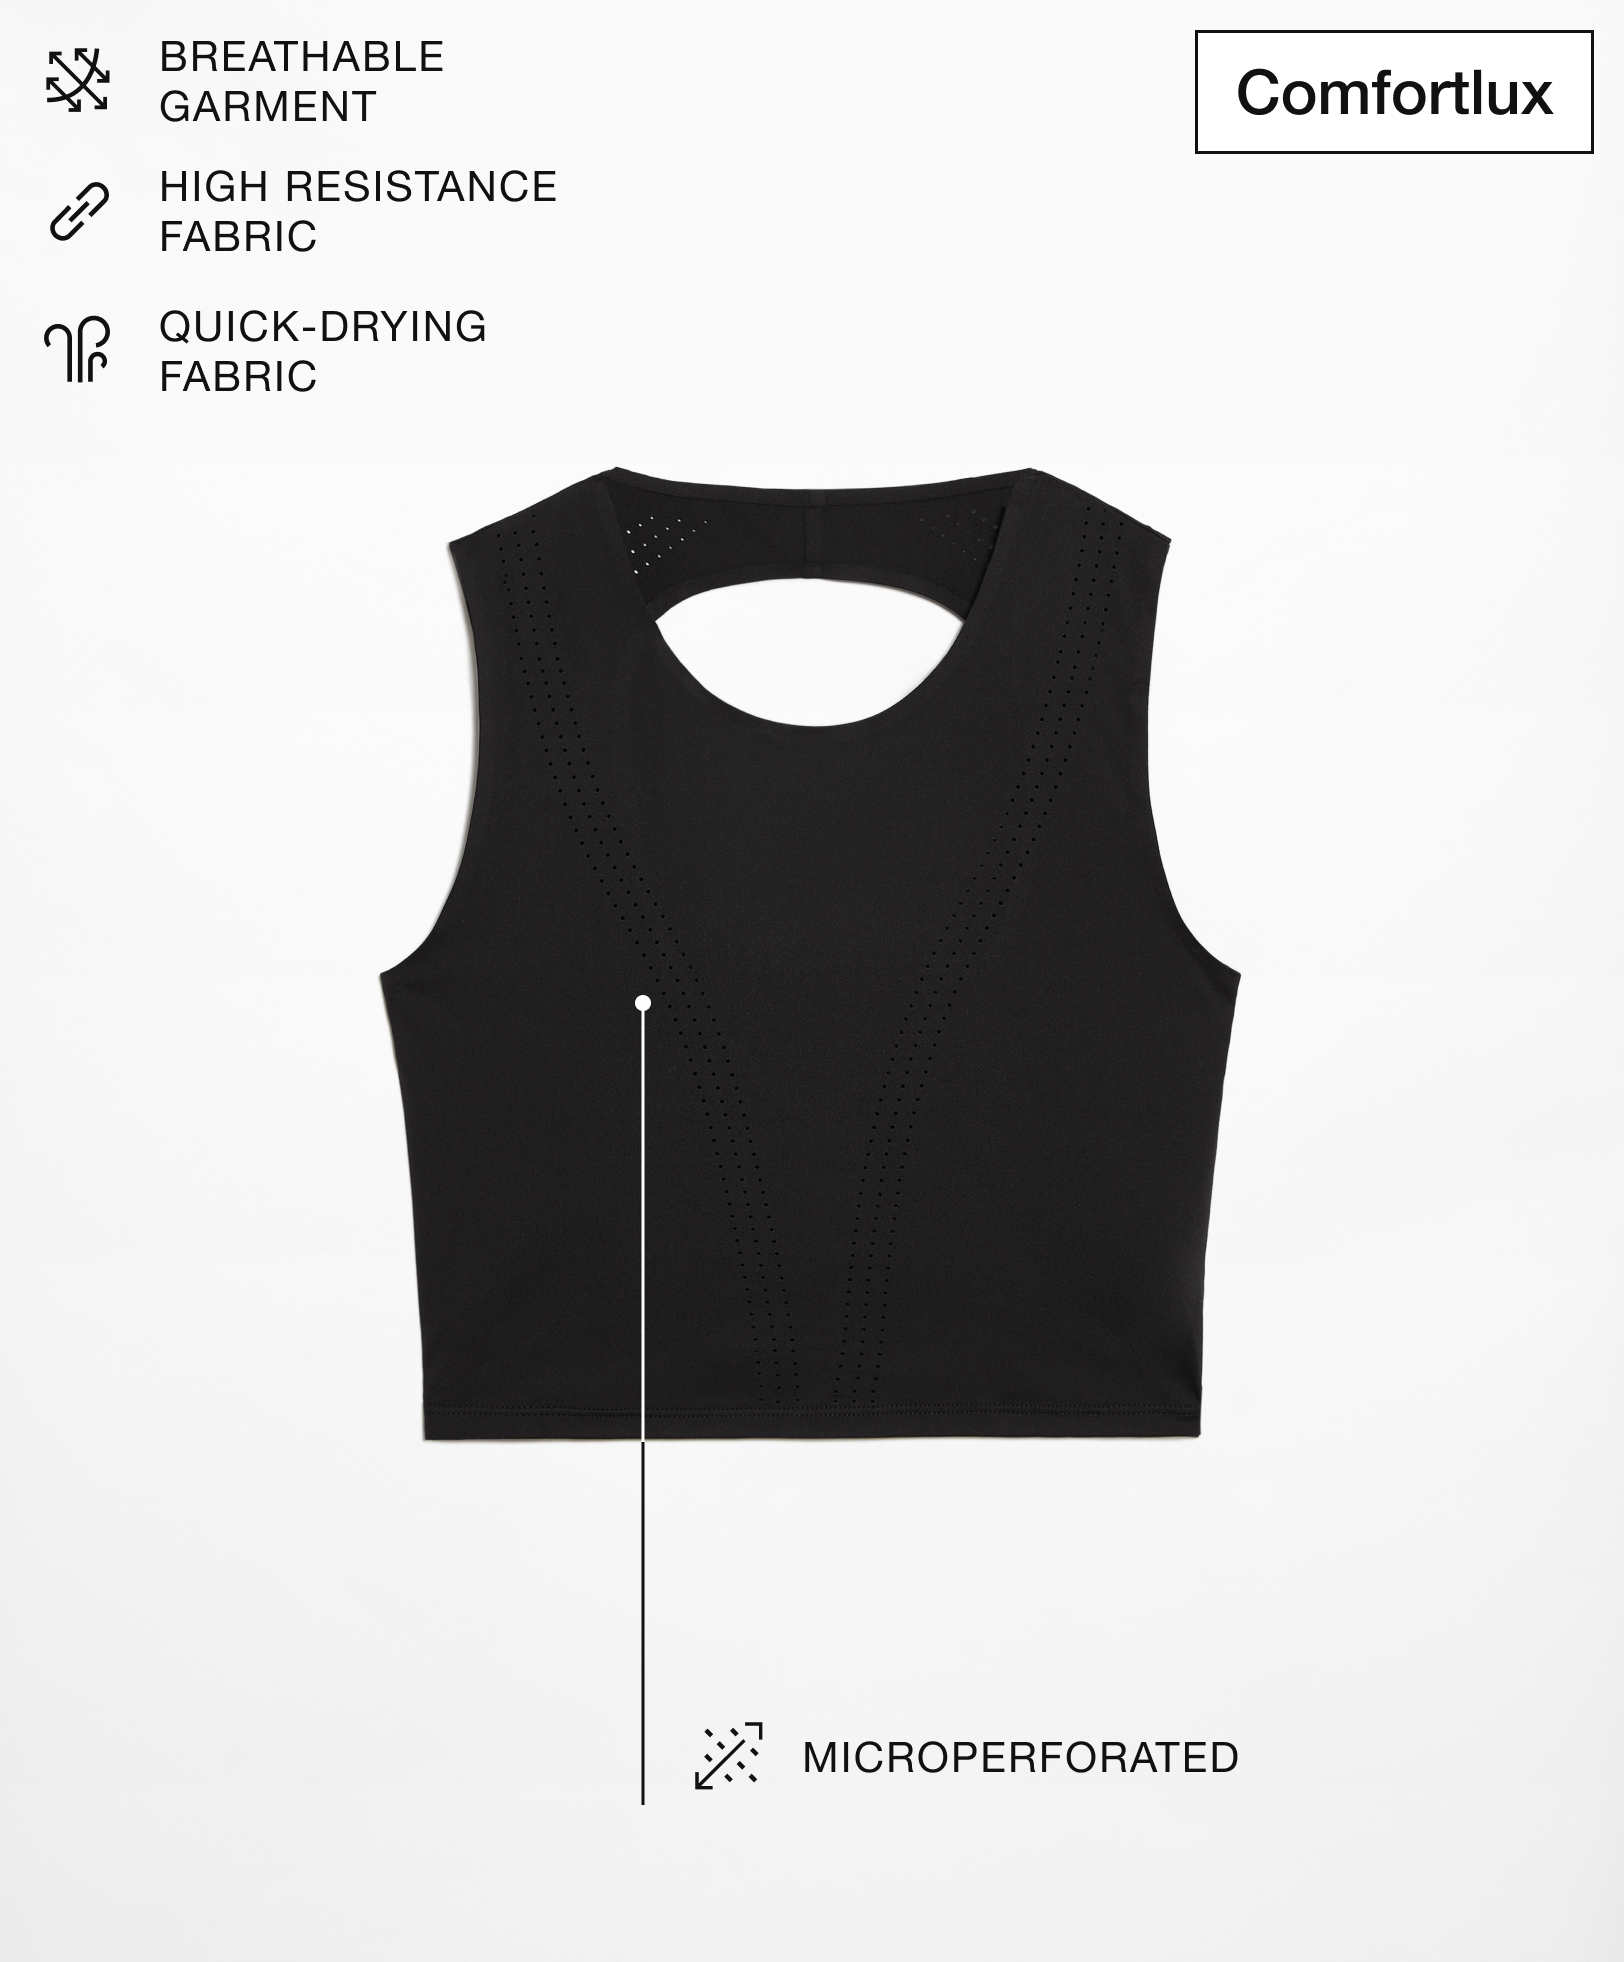 Microperforated Comfortlux sleeveless T-shirt